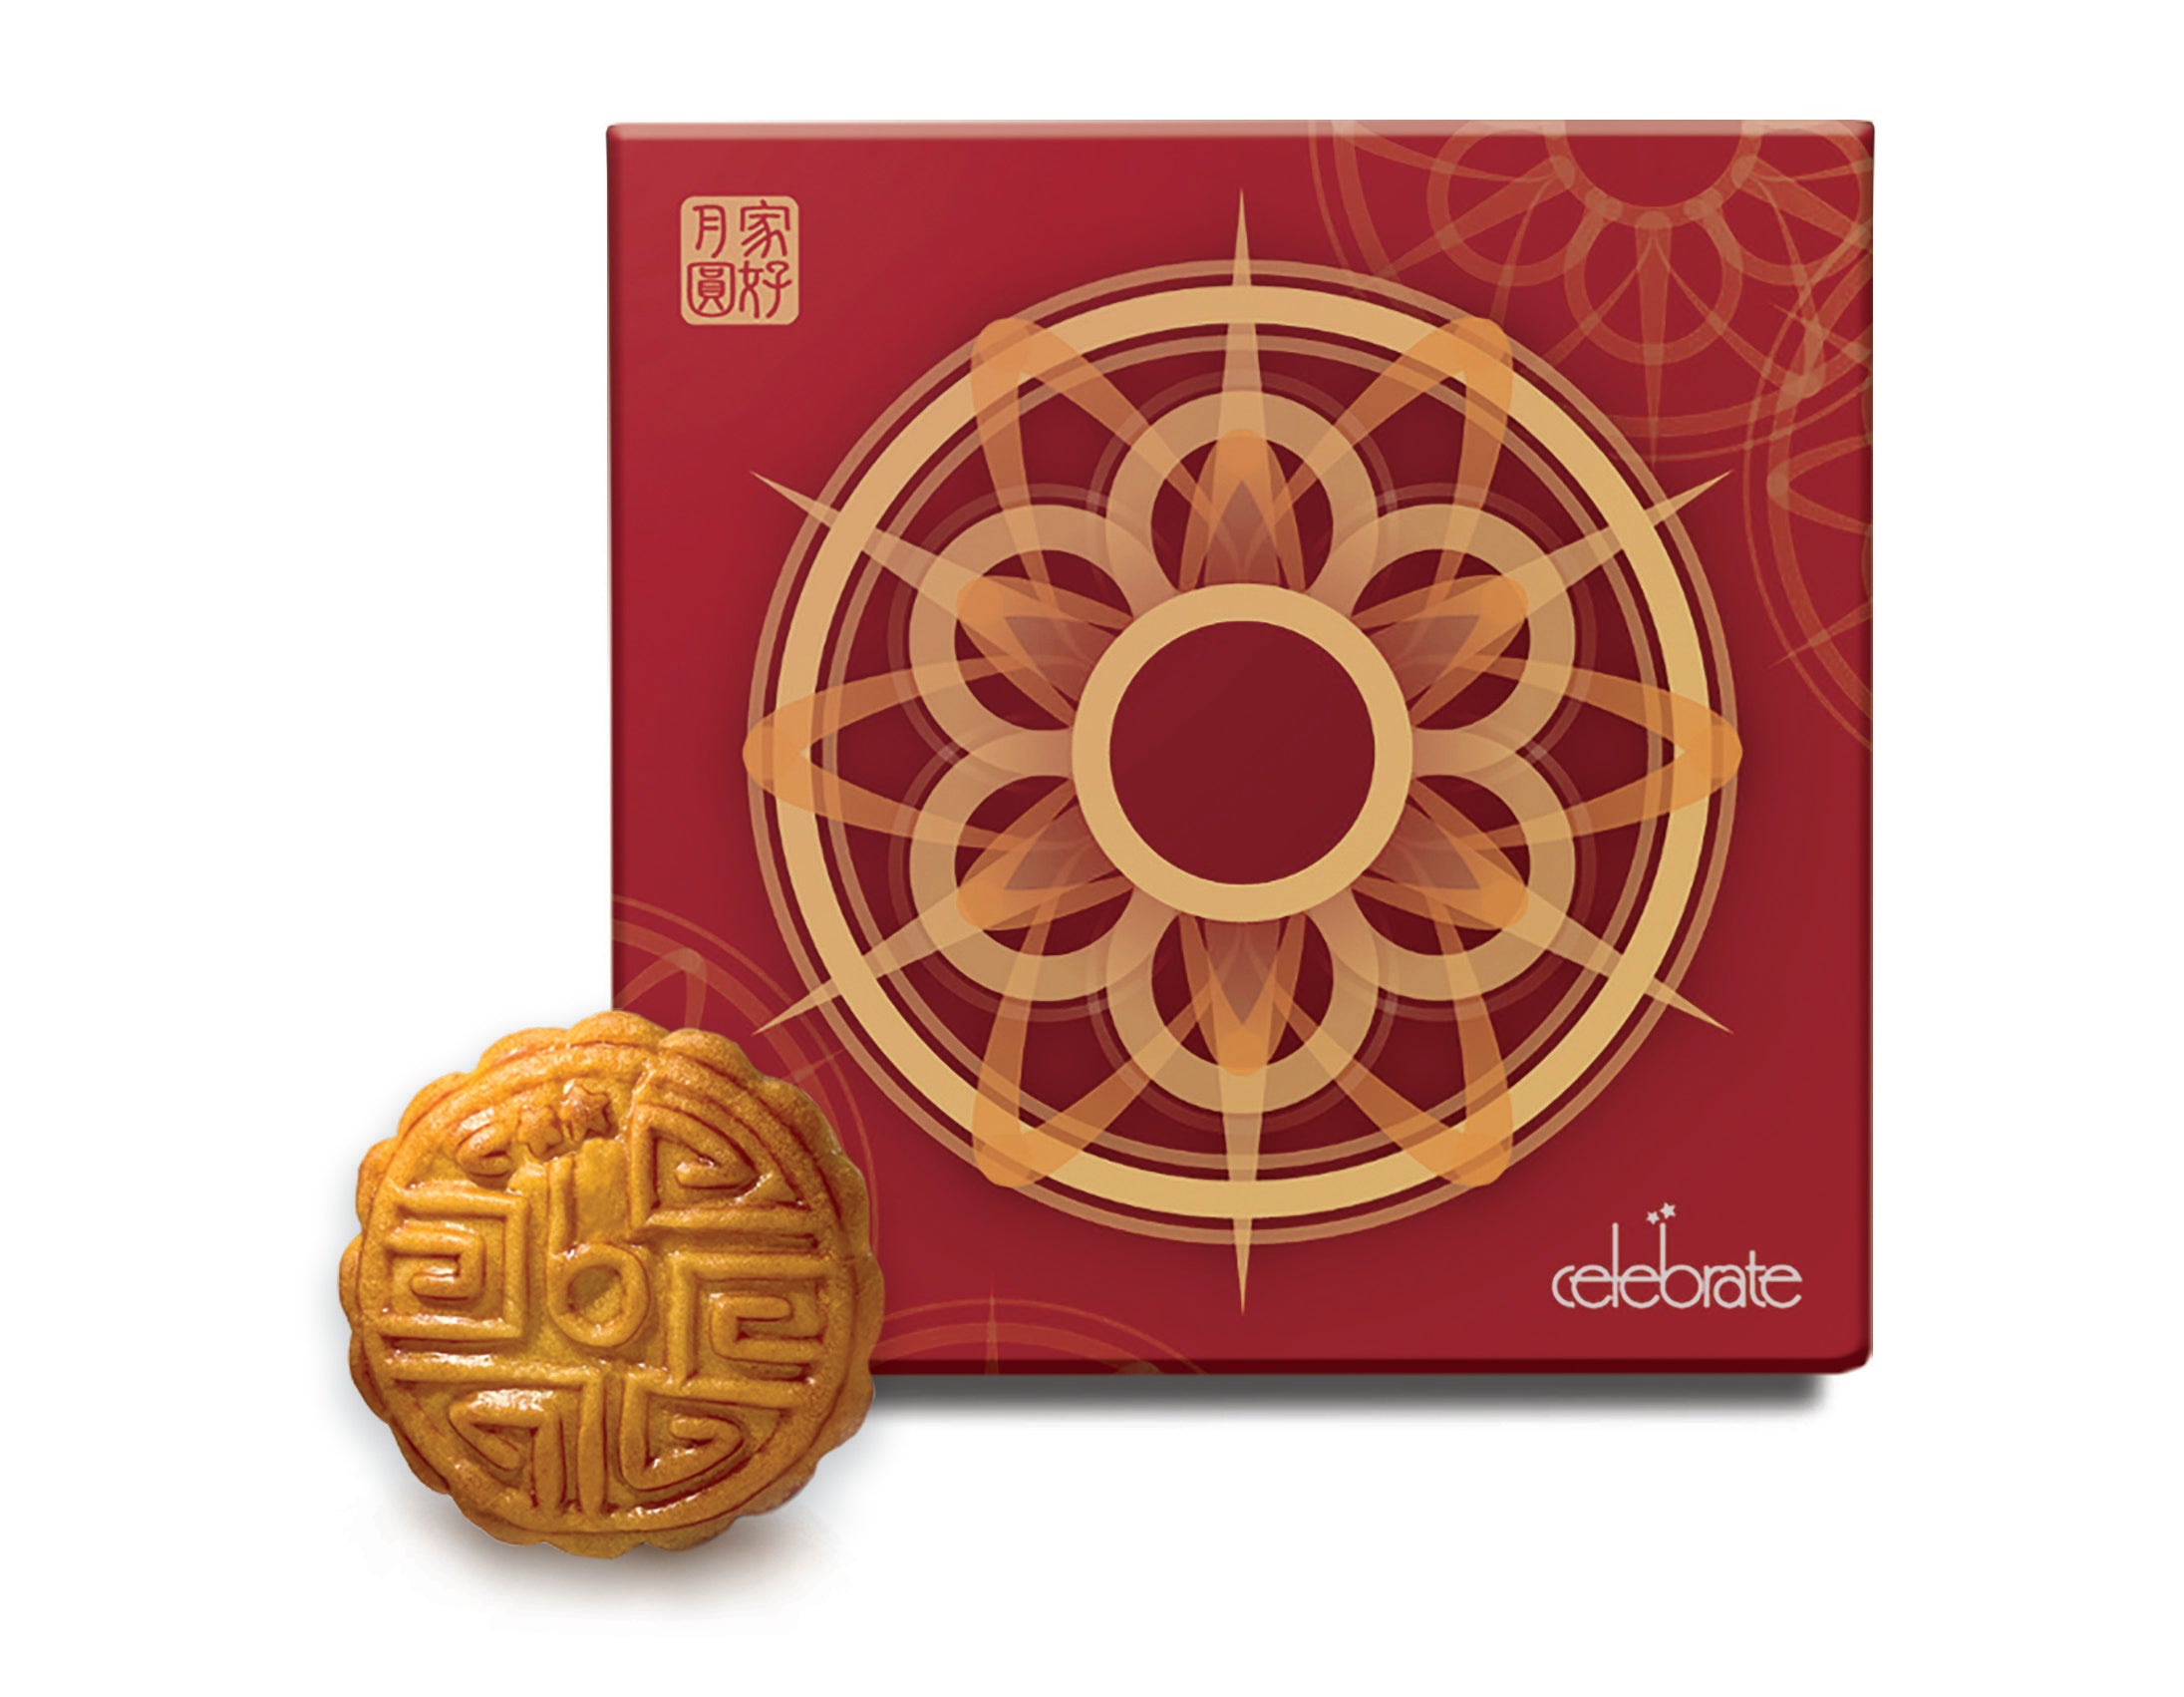 Celebrate Club | Celebrate Red Bean Paste Mooncake with Mandarin Peel (4 pcs) (Physical Product)